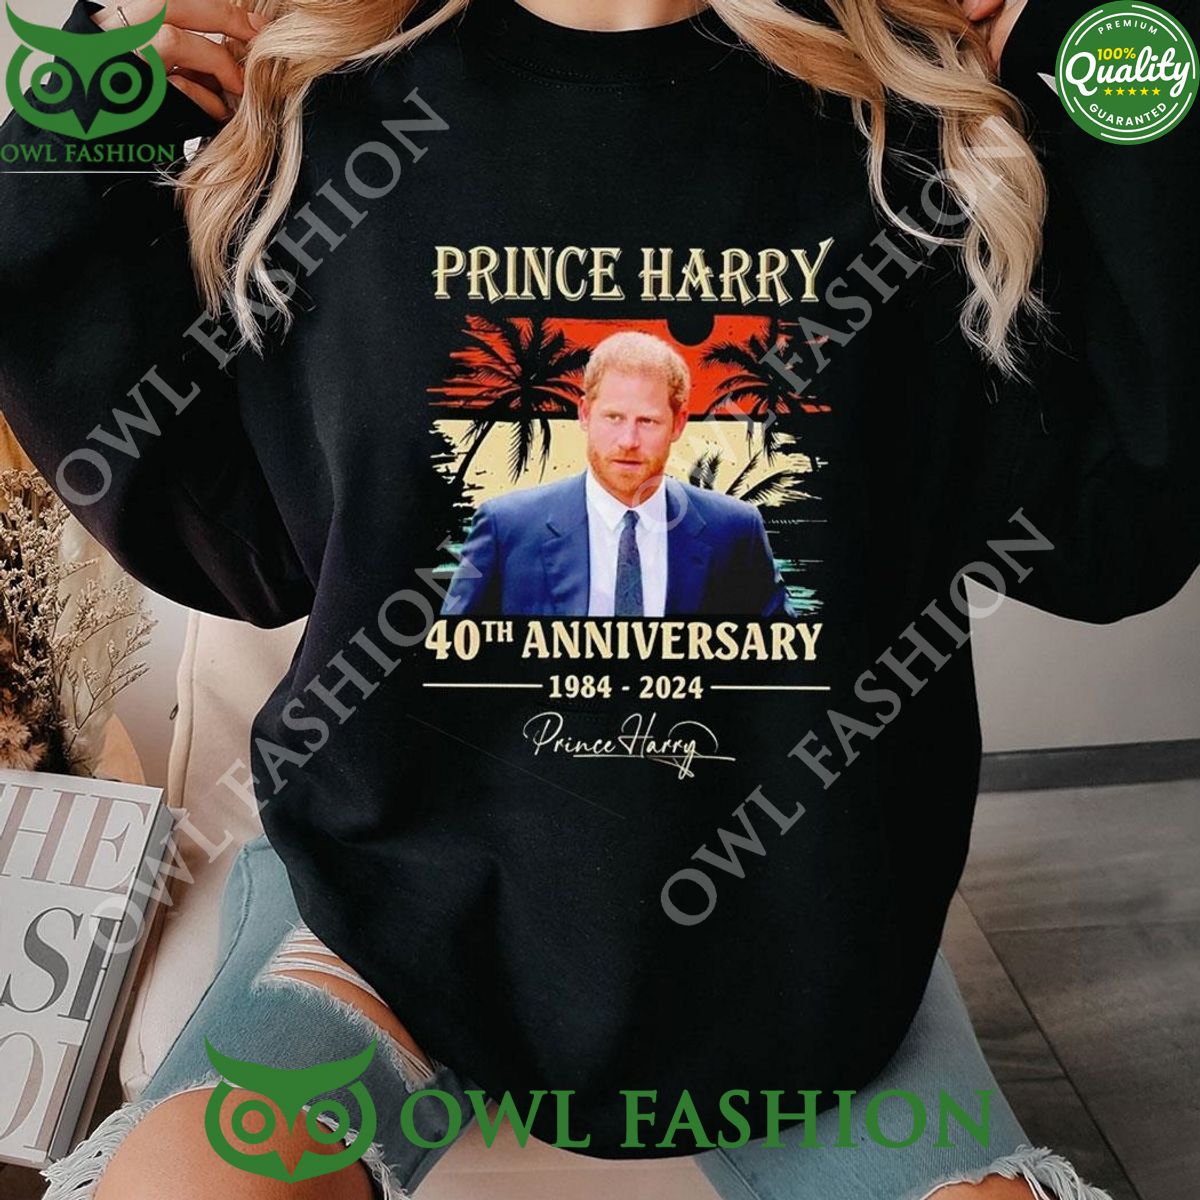 prince harry 40th anniversary 1984 2024 signature 2d t shirt 1 qKavj.jpg